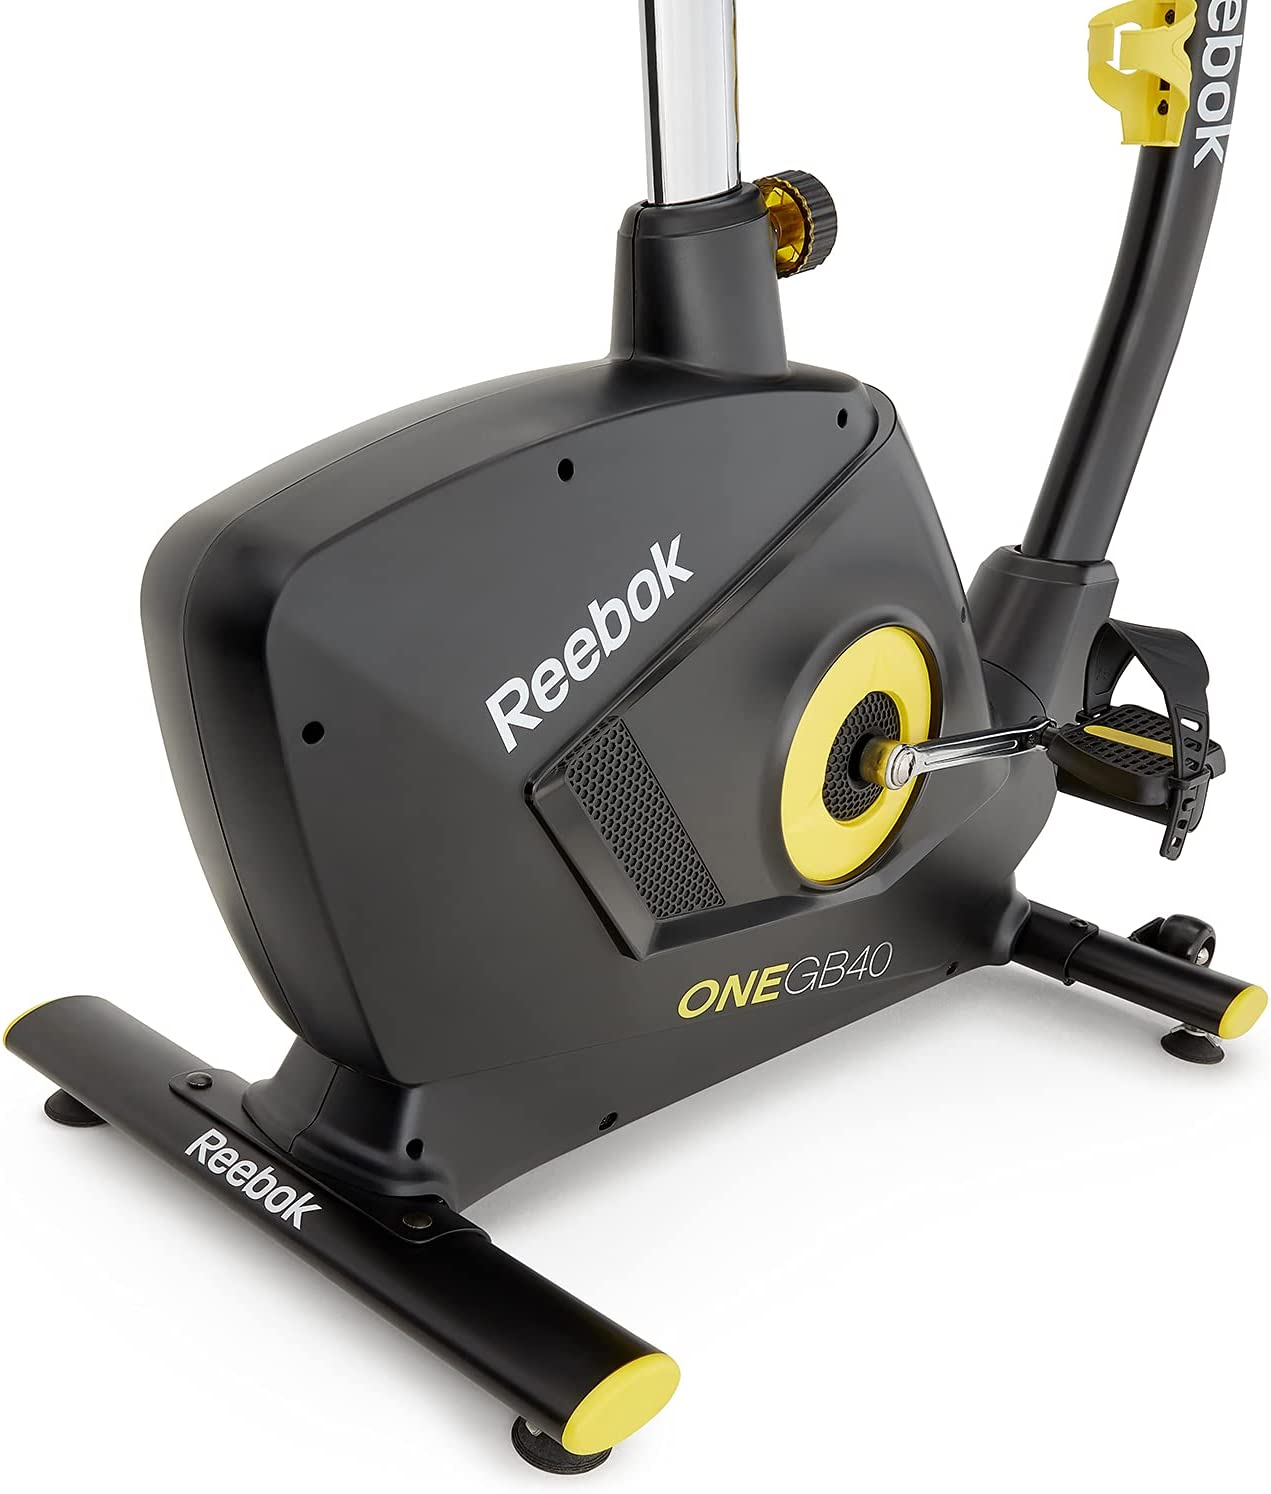 Reebok Exercise Bike GB40 - Pedals